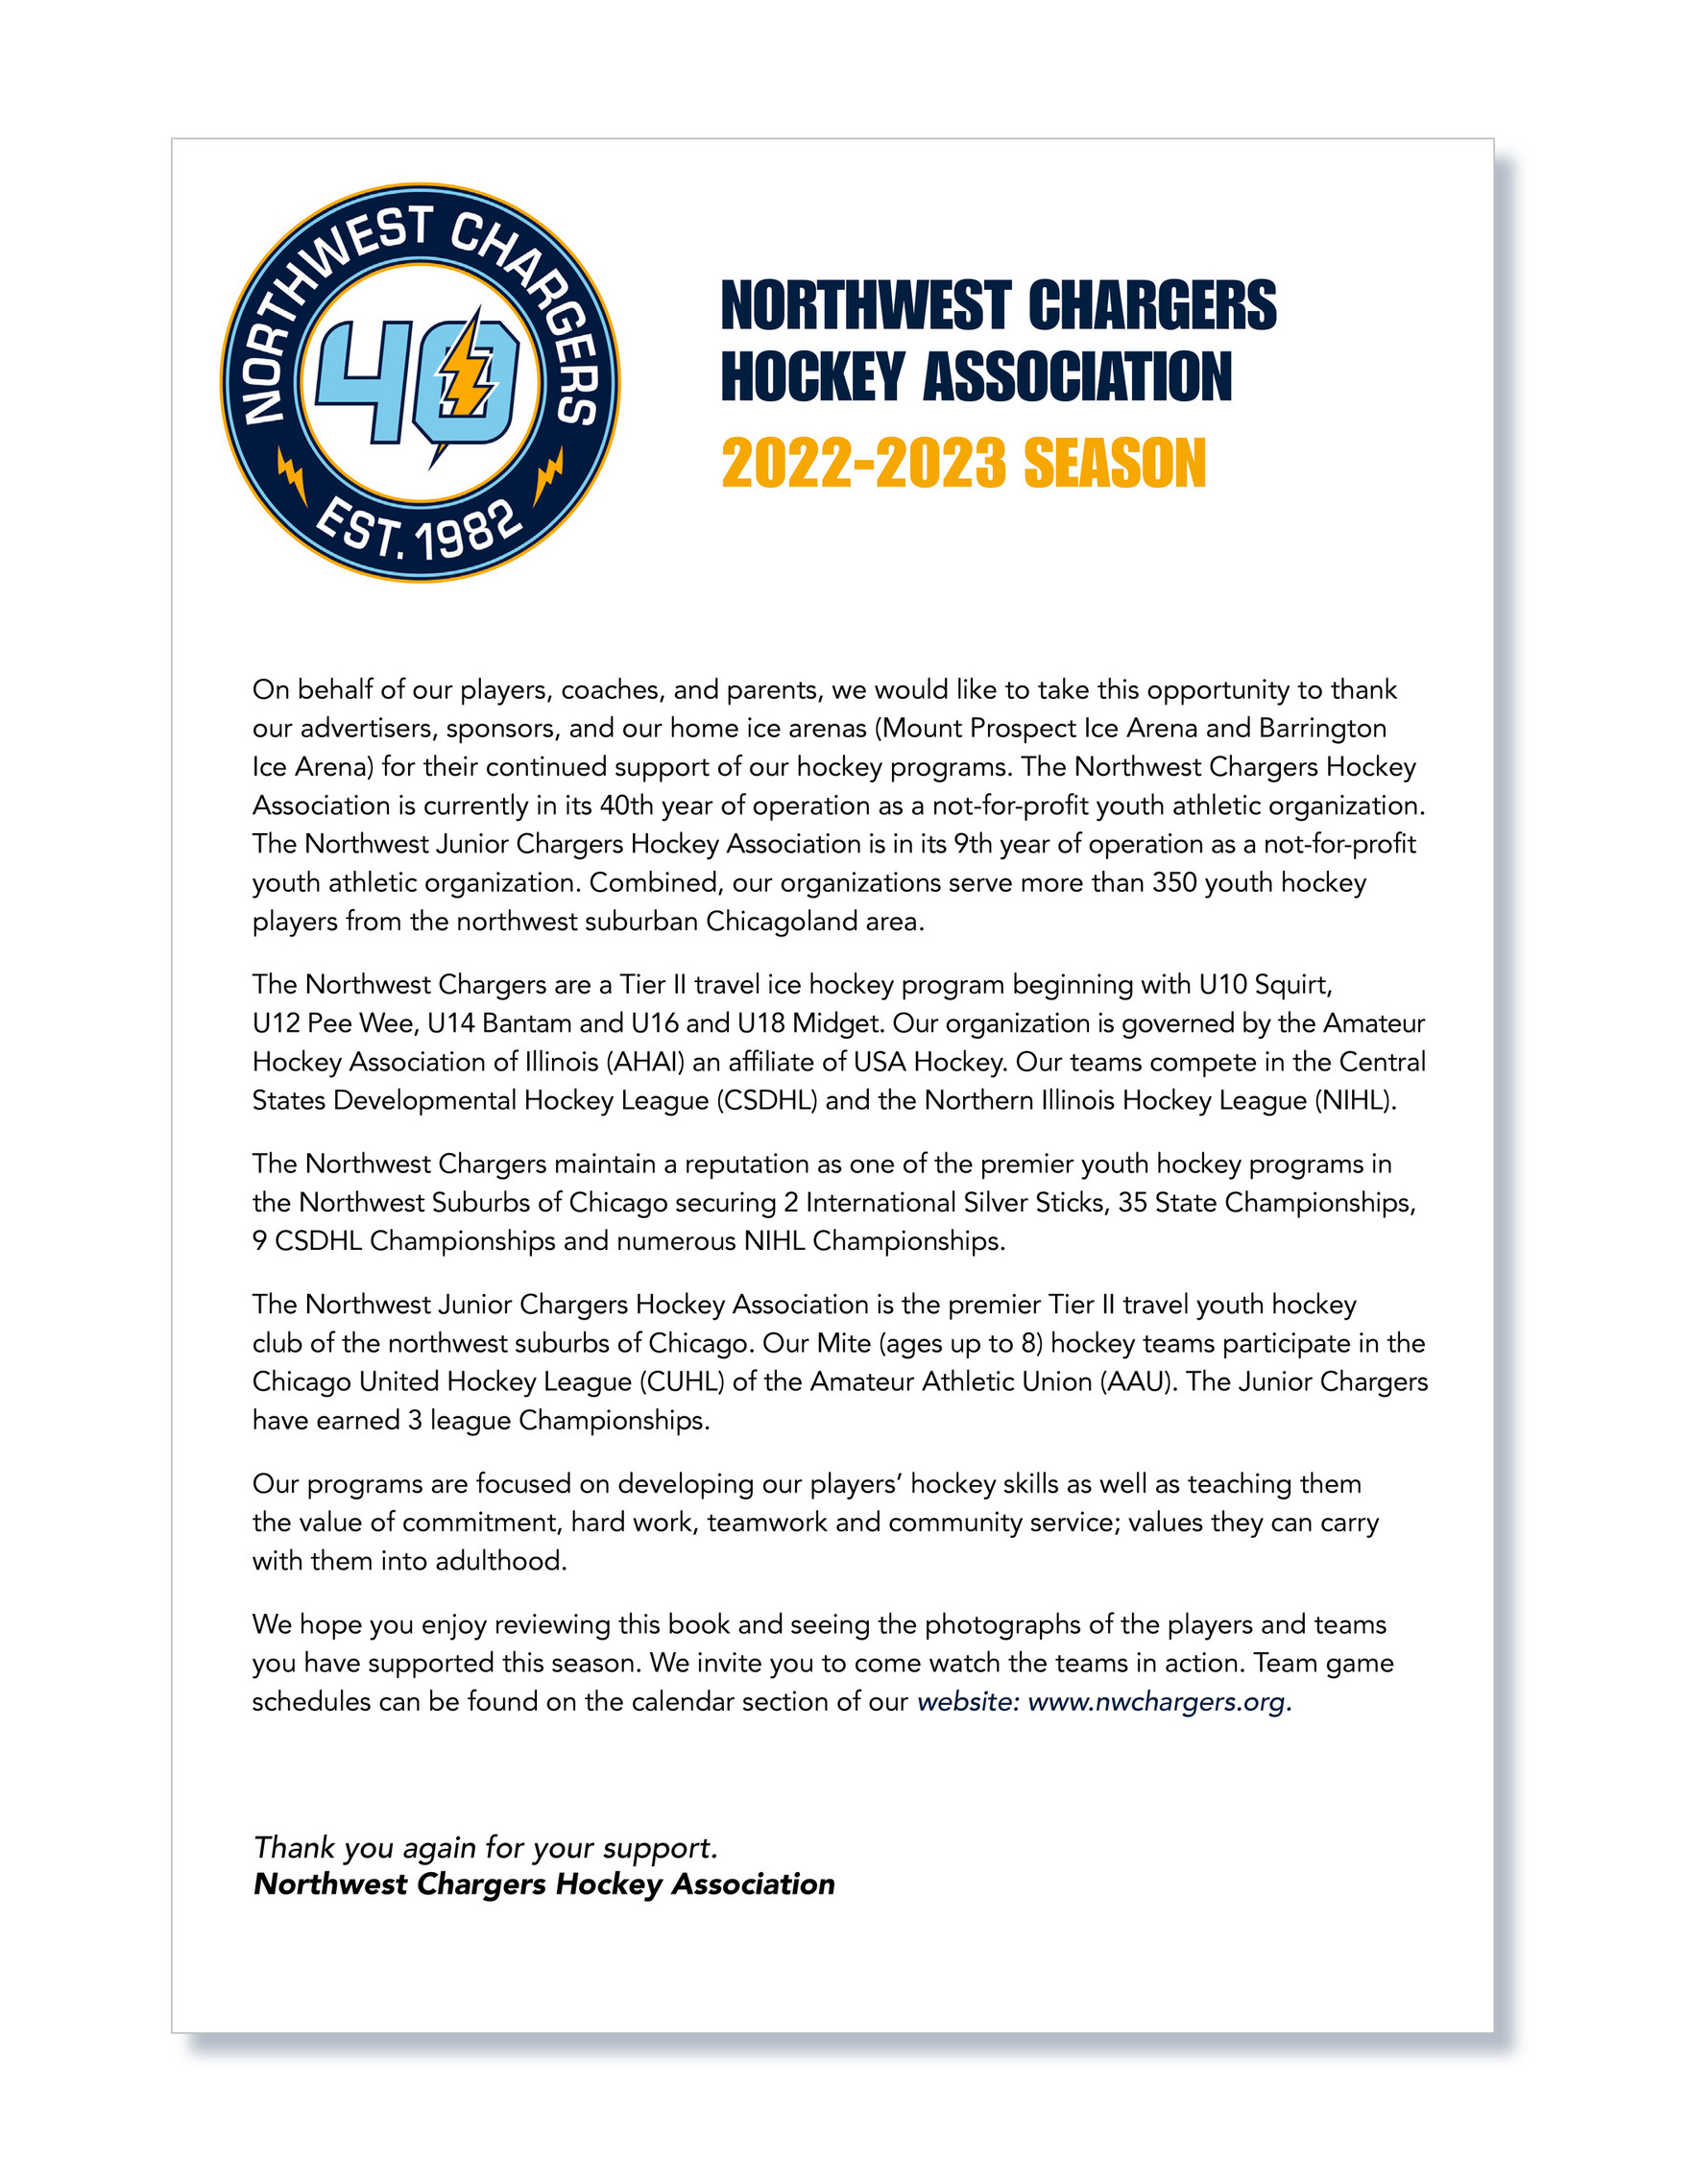 Northwest Chargers Hockey Association